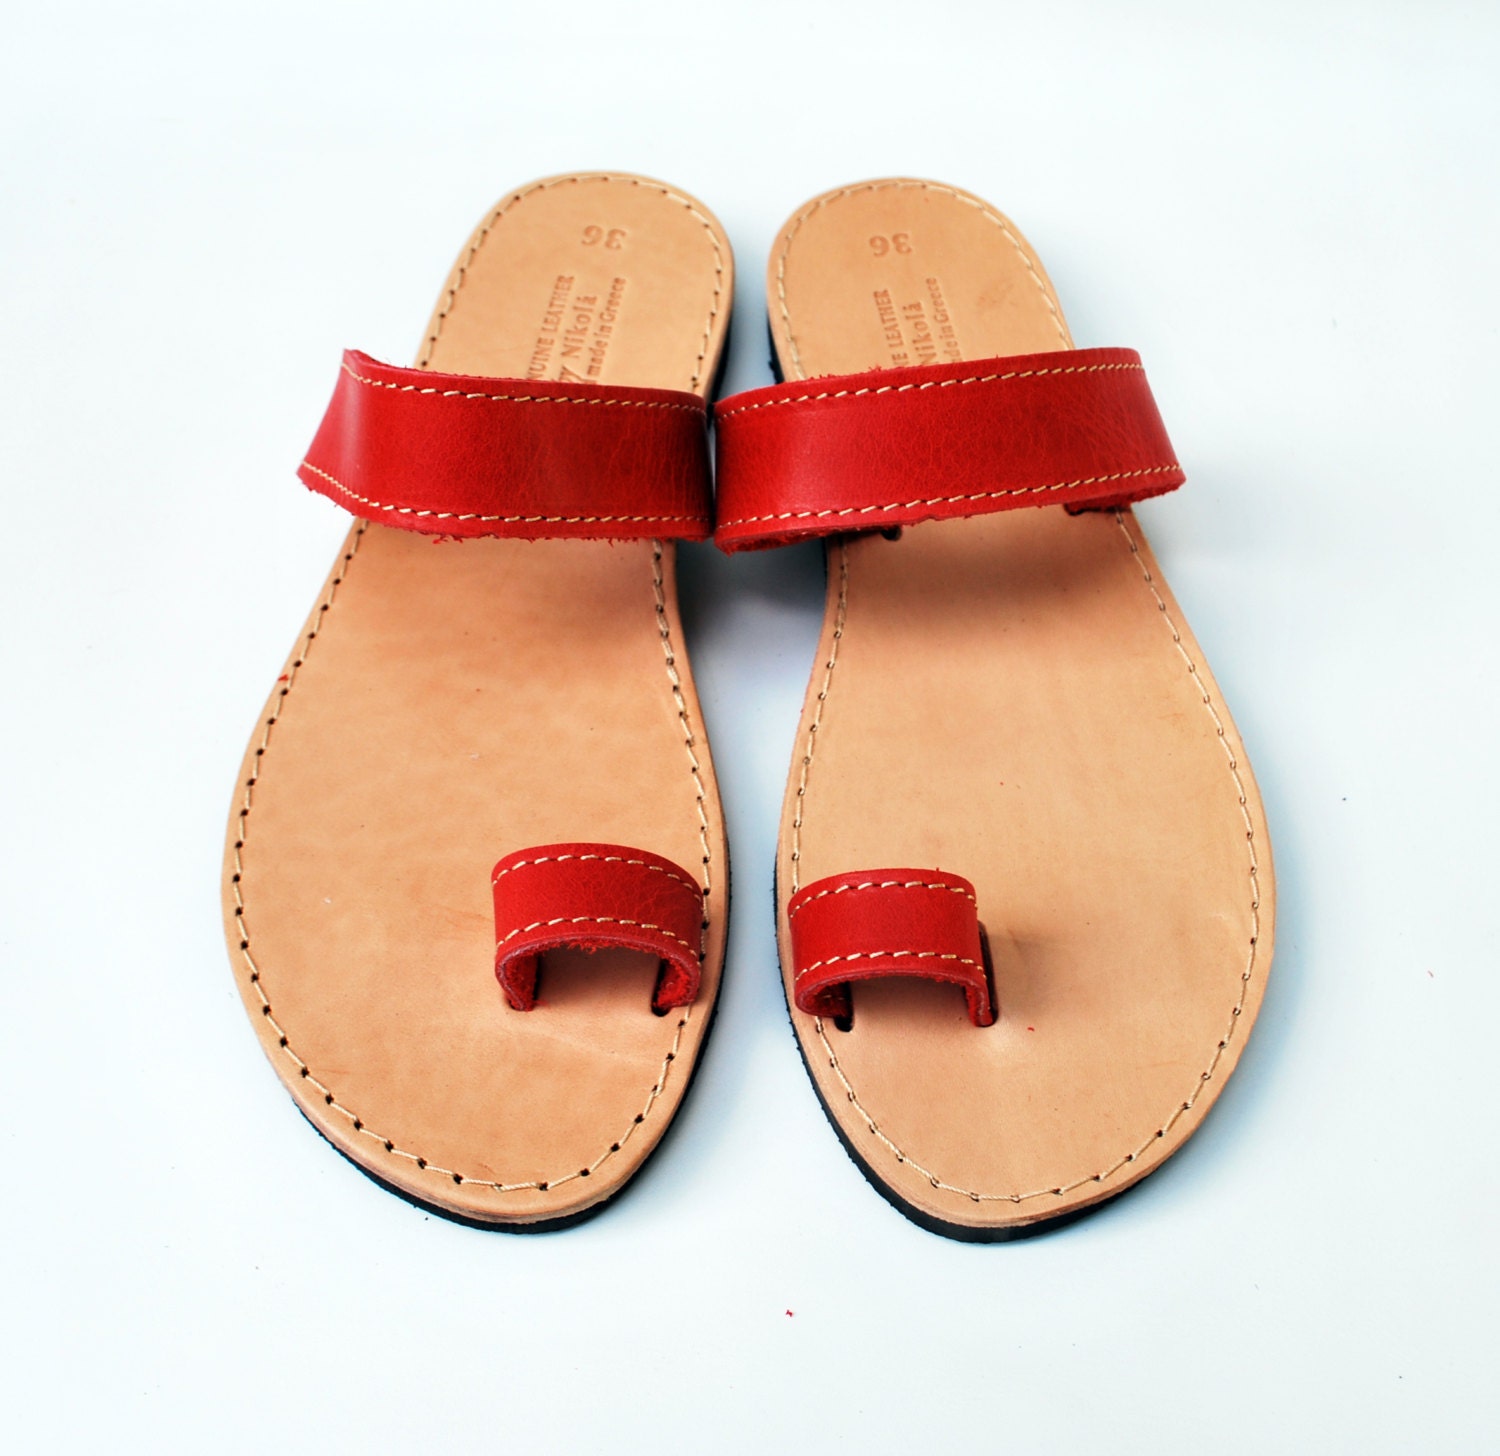 Light red toe ring sandals handmade women leather sandals